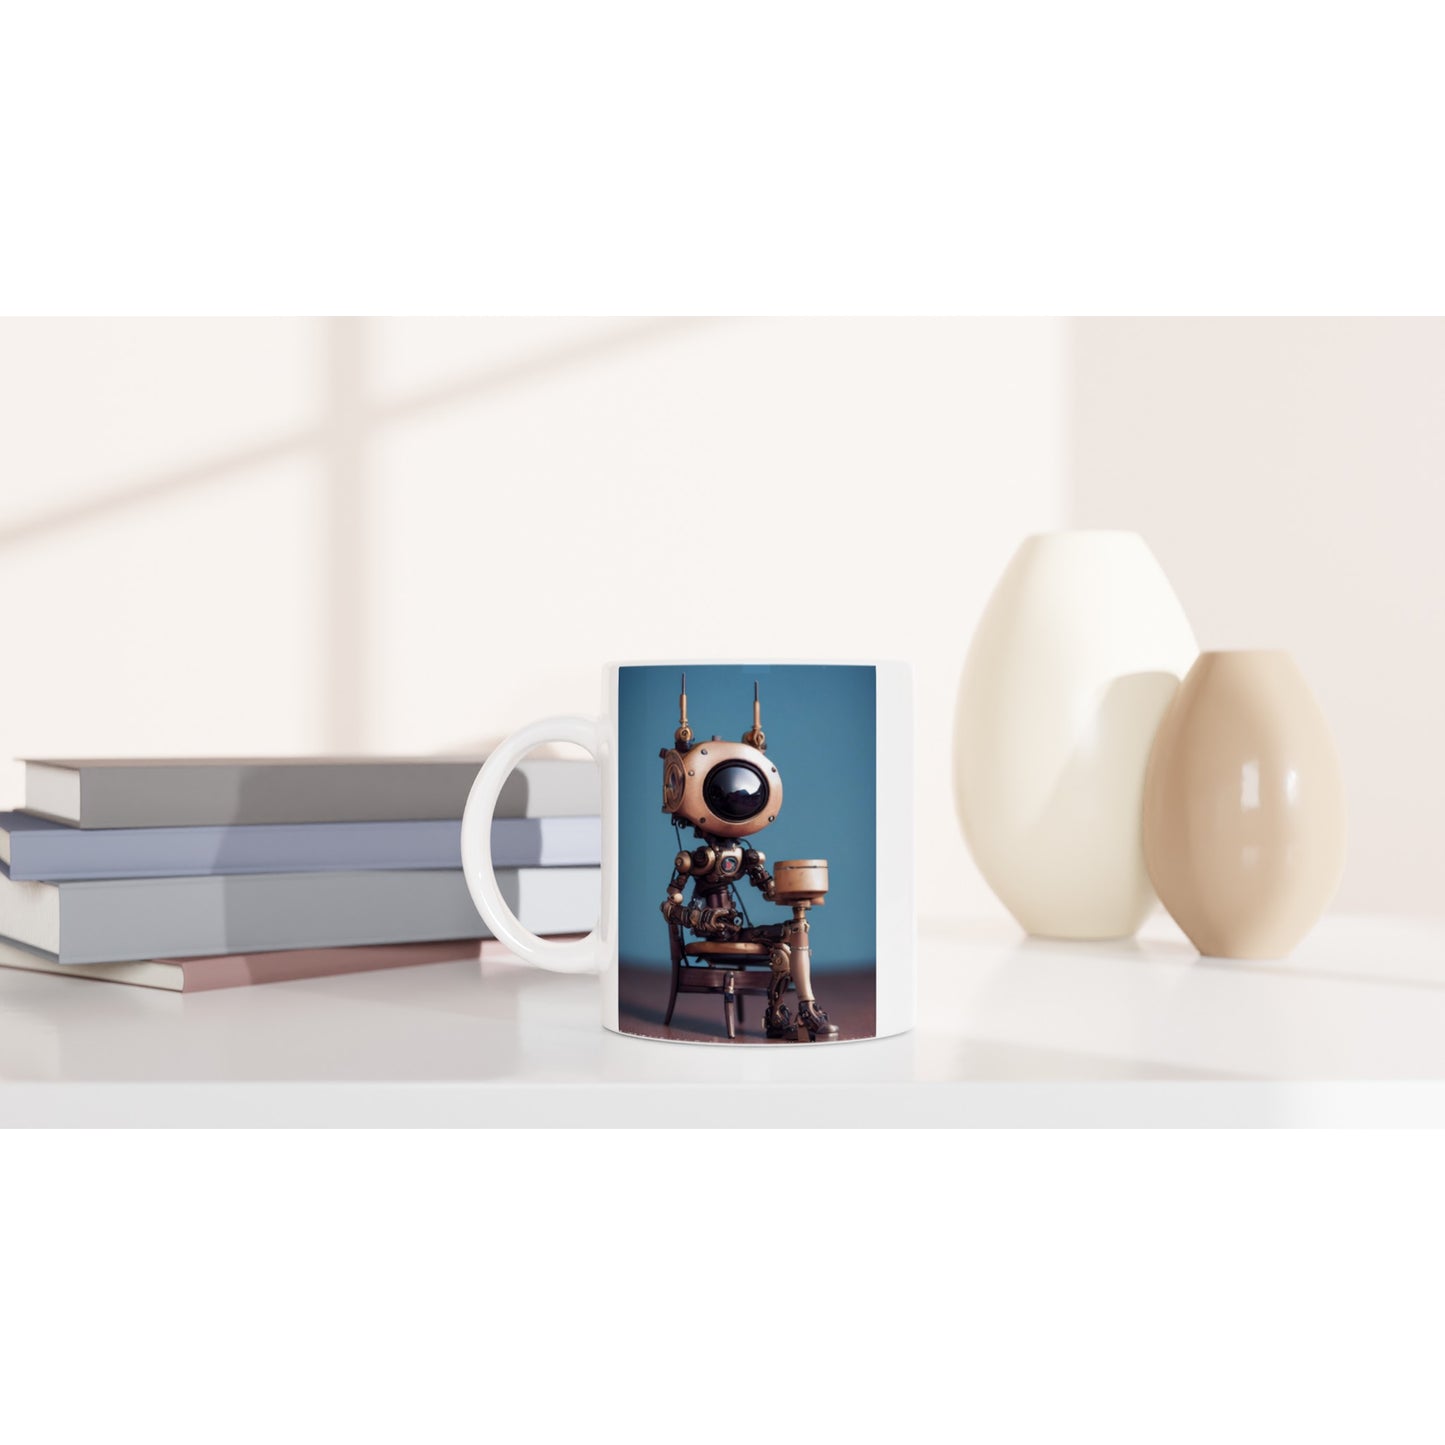 Personalsierbare bedruckte Tasse - Tiny robot with a present - "Tiny Sam" - Wandbild - Customizable Coffee Cup - Personalized Gifts - Kunstdruck - Roboter mit Geschenk - Steampunk - Acryldruck - Present Robots - Personalized Gifts - Poster with frame - nr.5 lebt - zukunft - Kunstwerk - Office Poster - Poster mit Rahmen - Kaffee Tasse  - Bedruckte Tassen - Kunst Marke - Art Brand - Wandbild - Kunstdrucke - Künstler: John Grayst & Pixelboys - emotional robots - Geschenkidee - Wall Art -